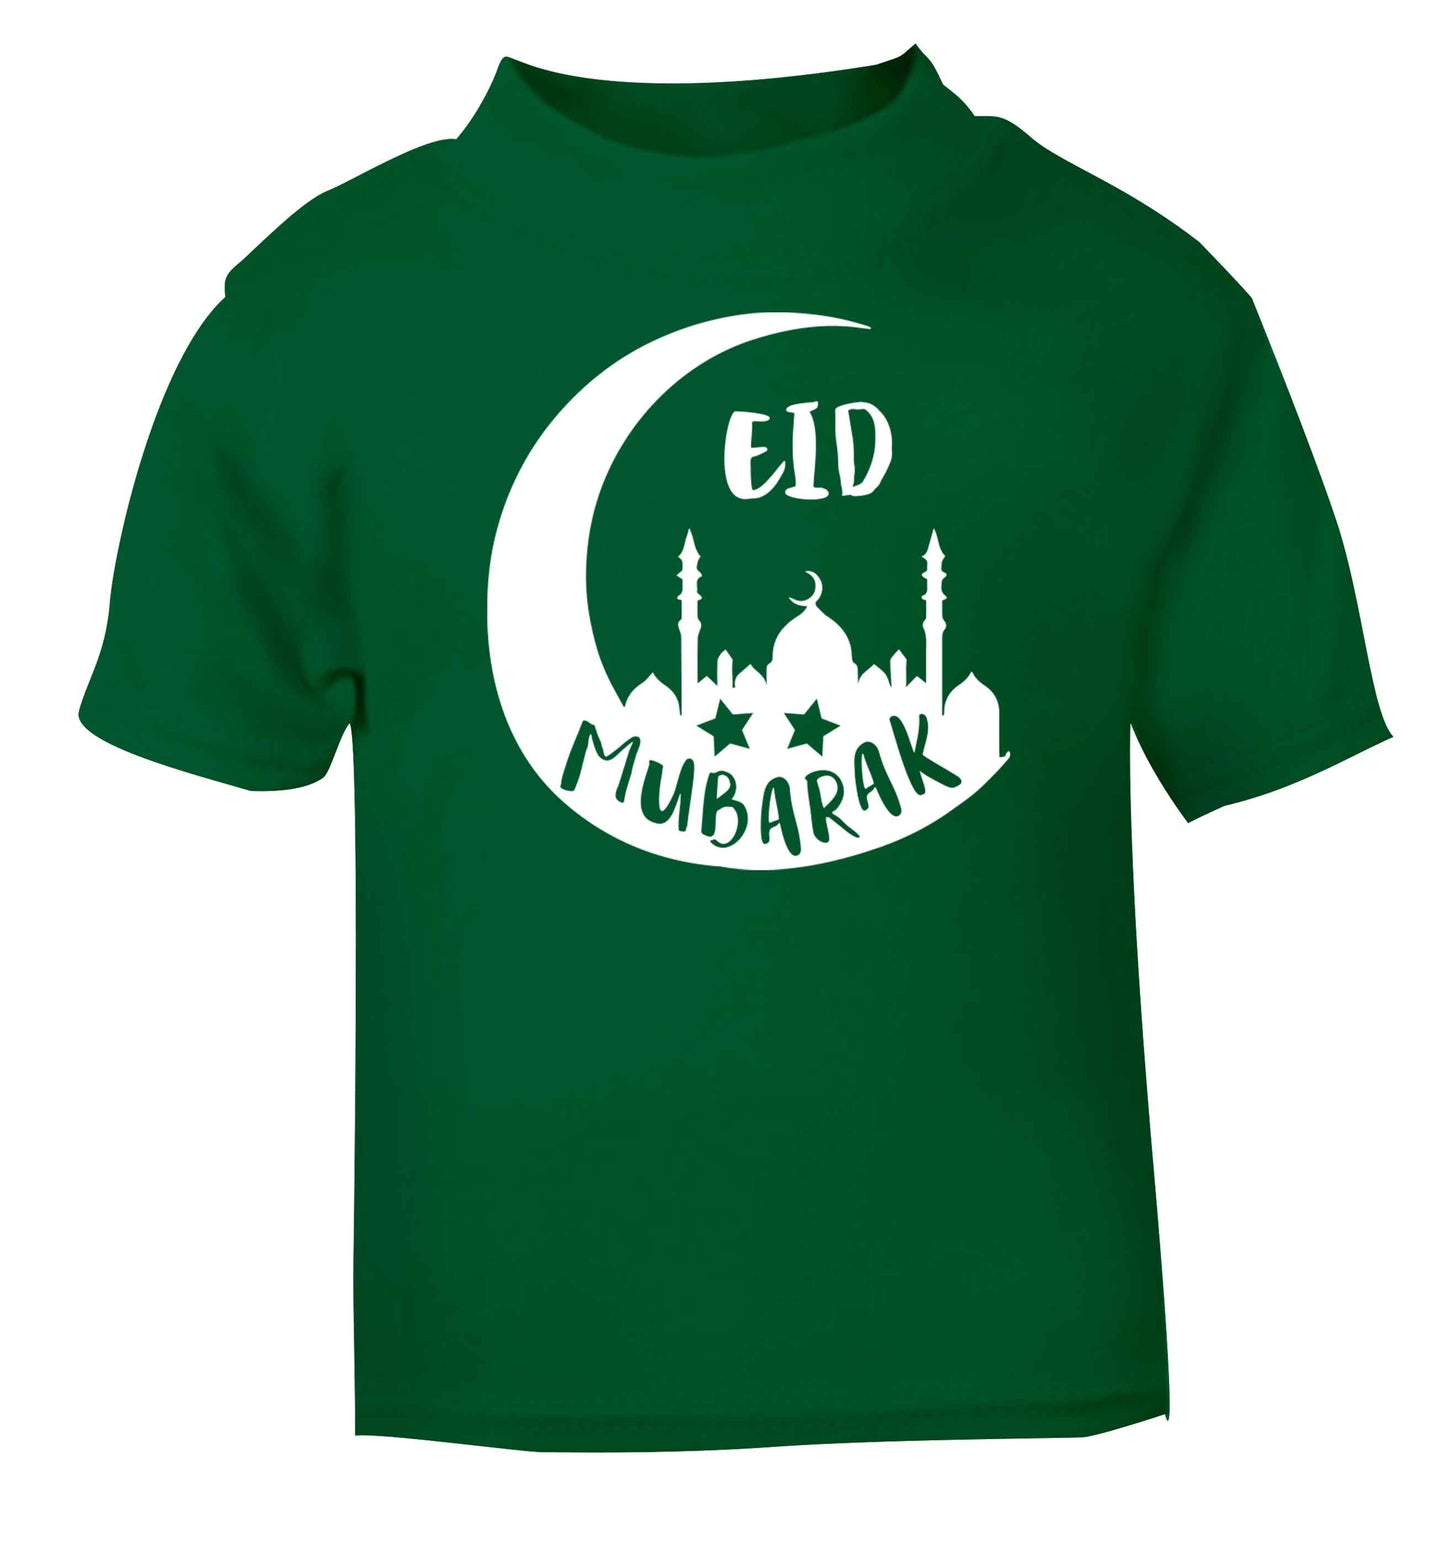 Eid mubarak green baby toddler Tshirt 2 Years